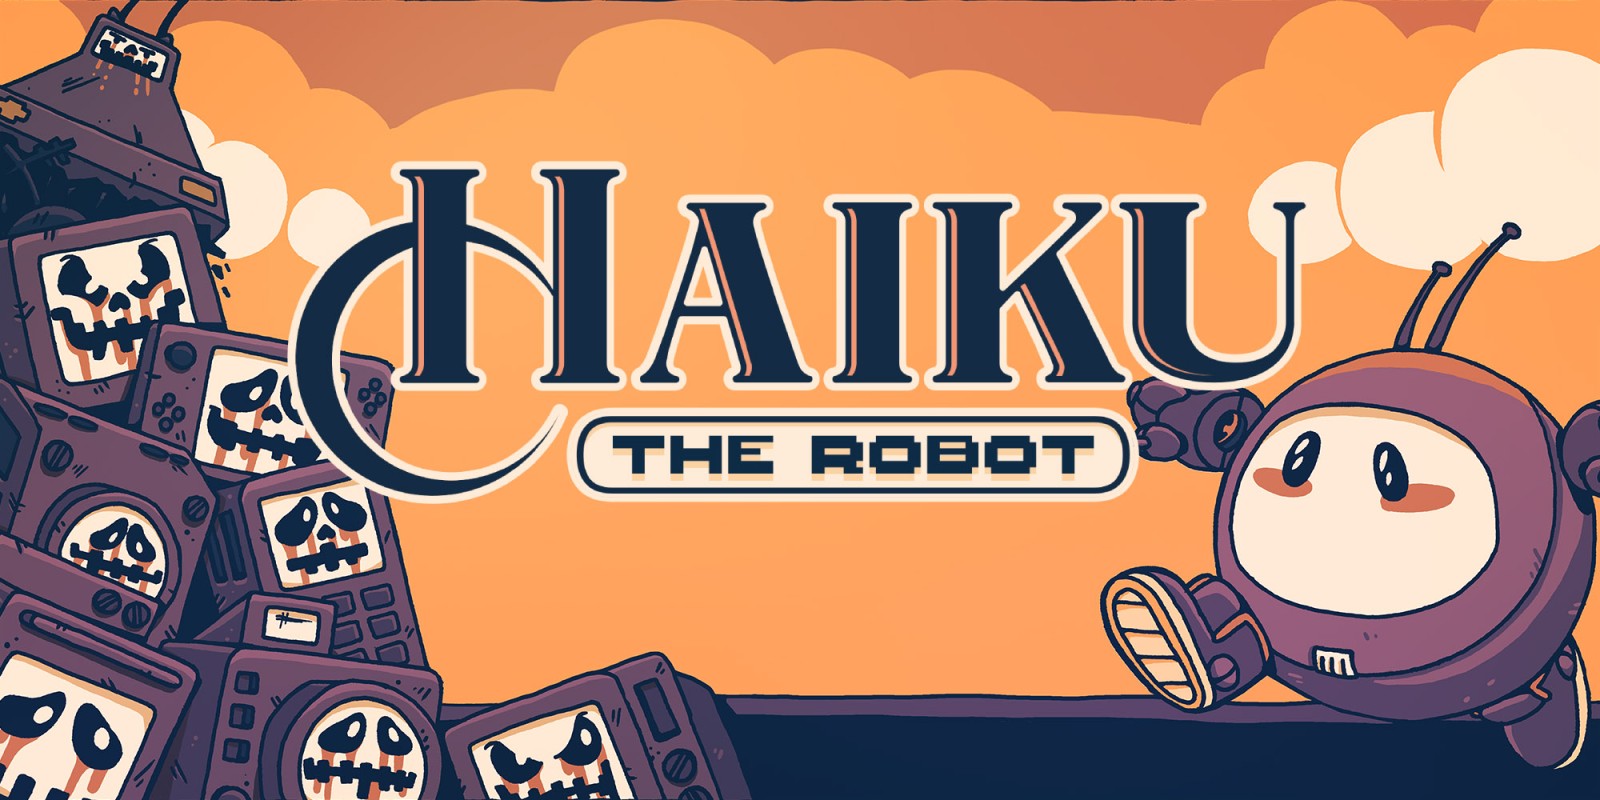 Haiku, the Robot